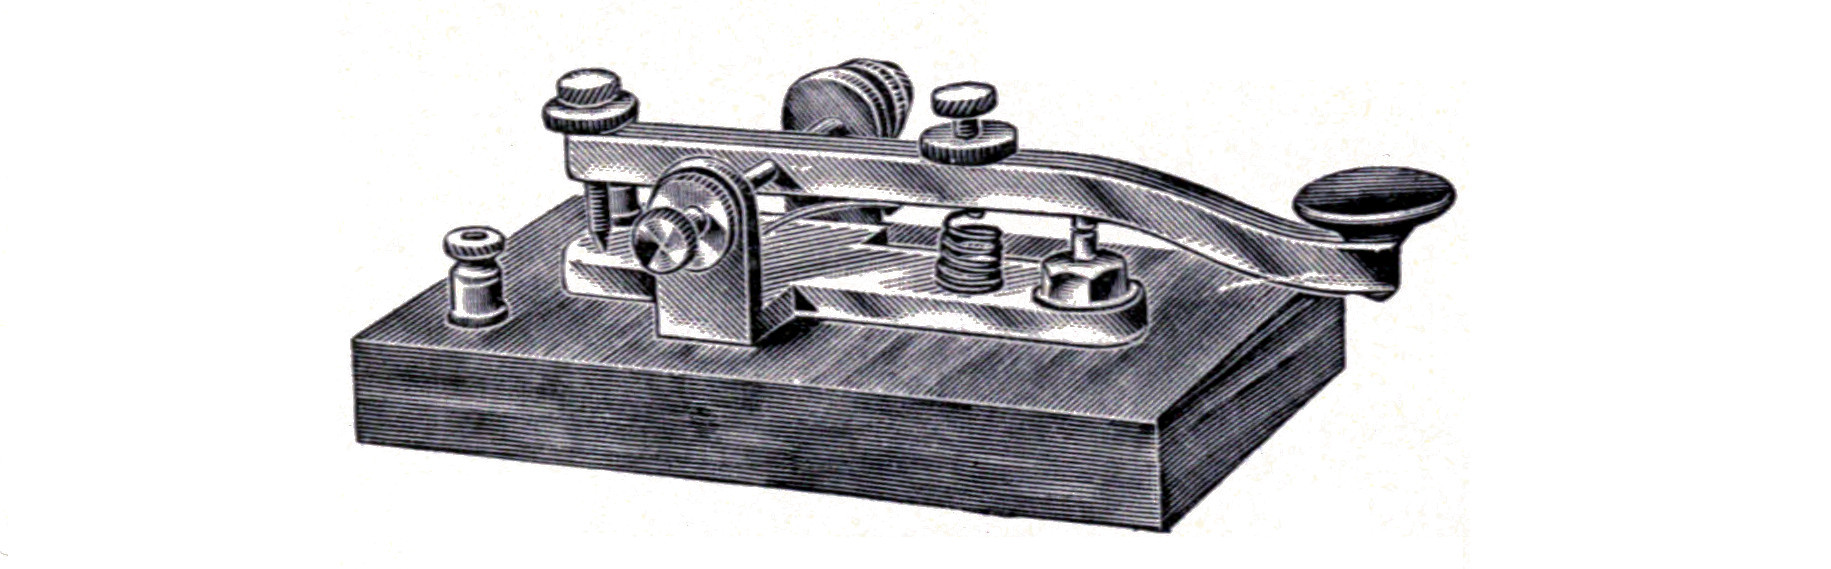 Fig. 69. "United Wireless Type Key."